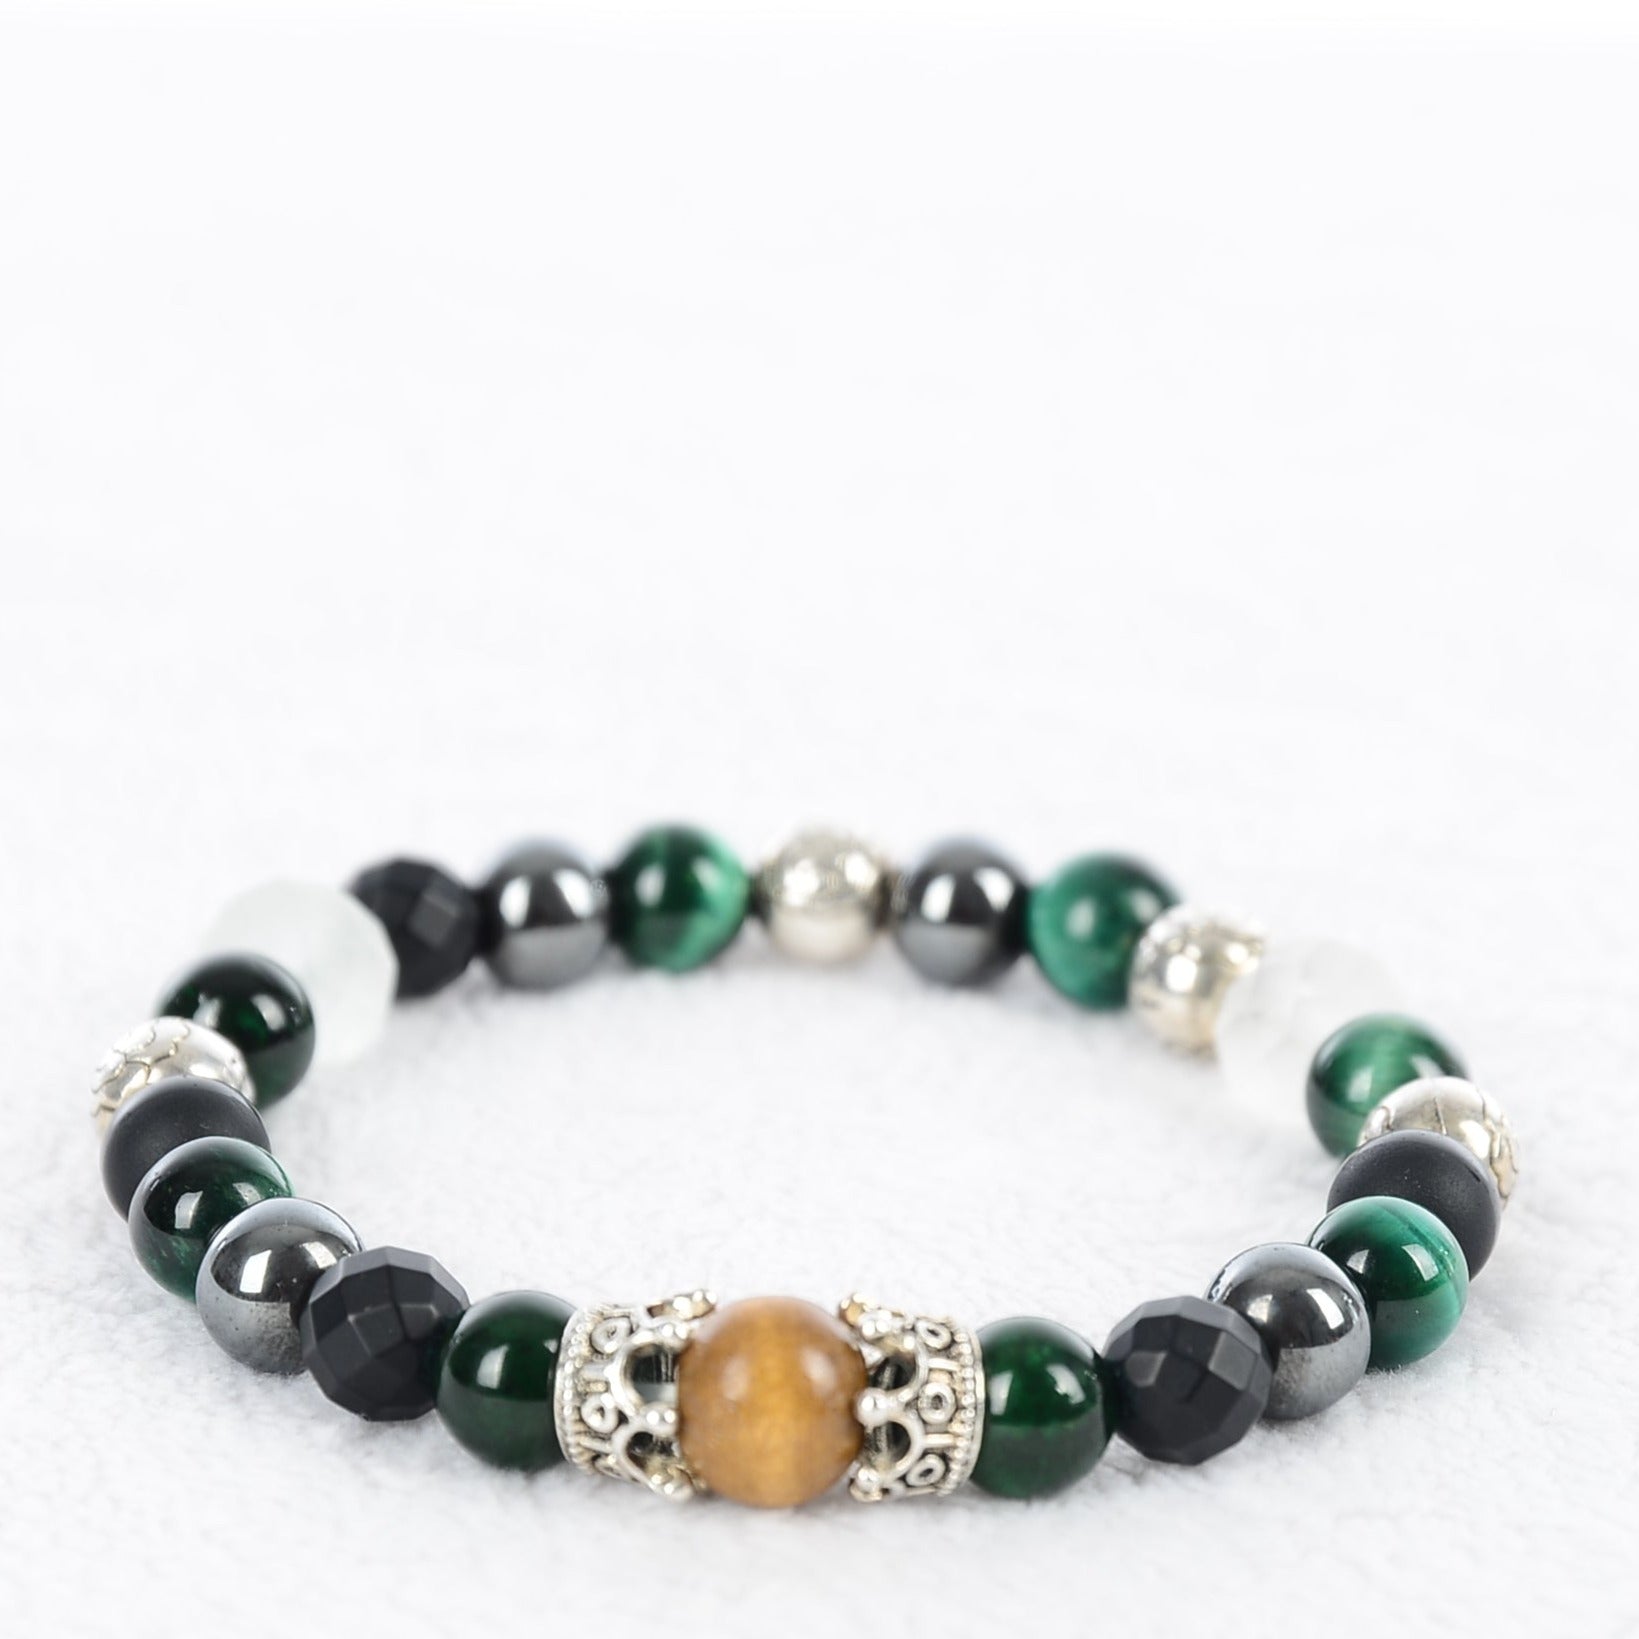 Gemstone bead bracelet made of green tiger eye and hematite made to order. 